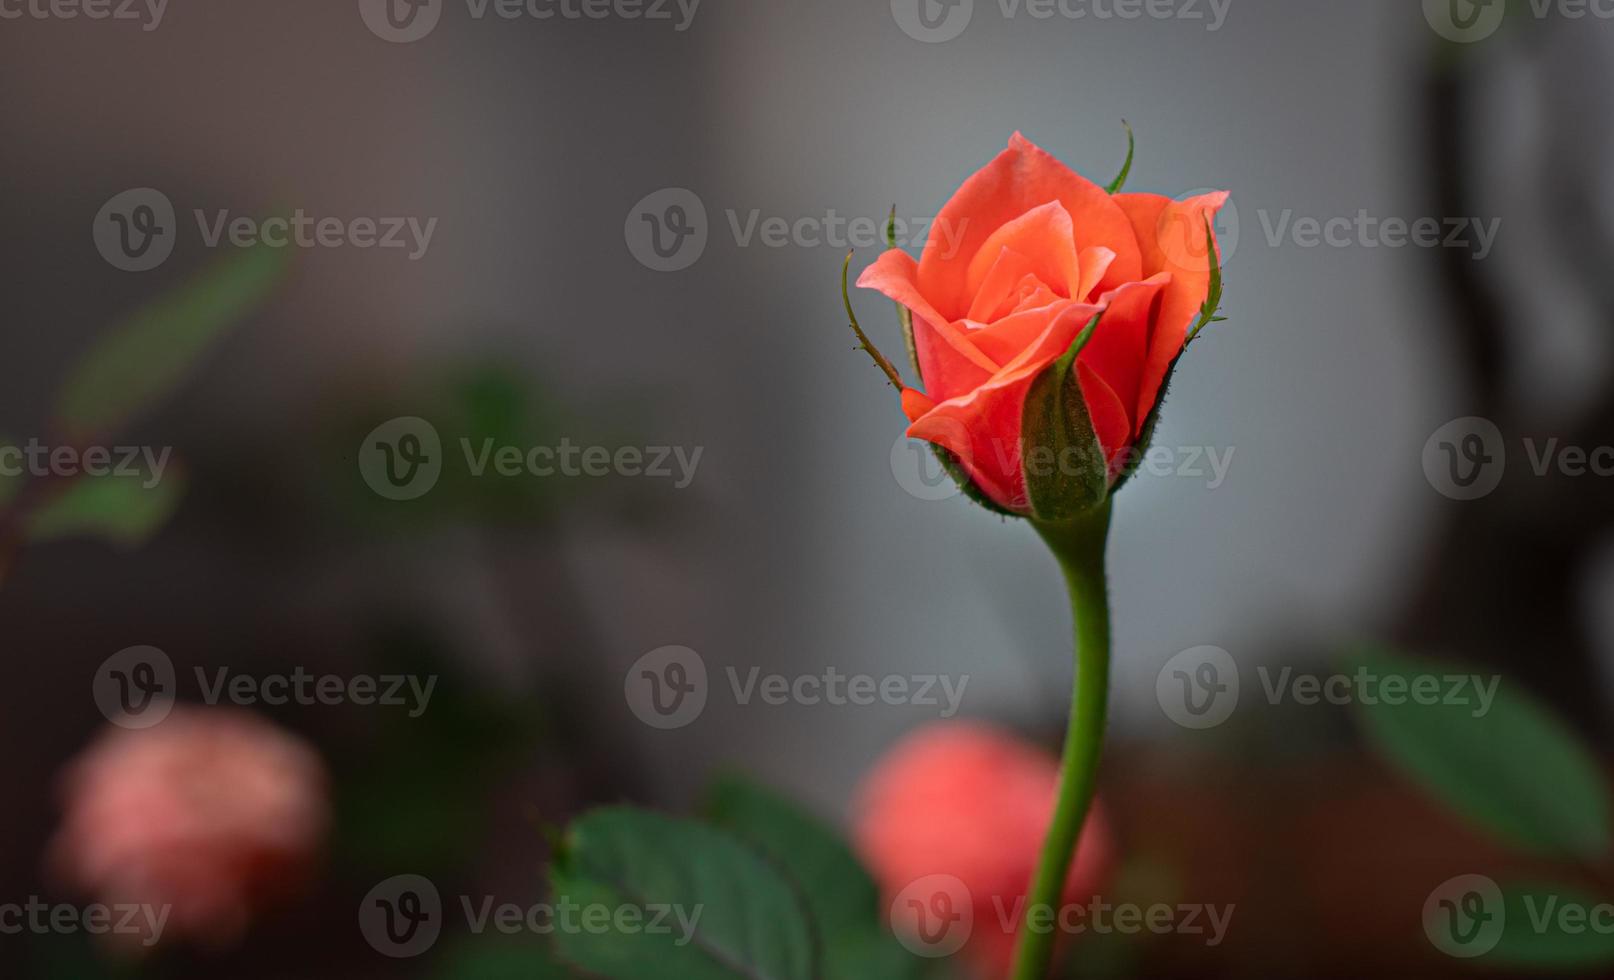 feche a pequena rosa chamada rosa de damasco, cor de rosa velha, mostrando pétalas e camadas de flores, luz natural, ao ar livre foto